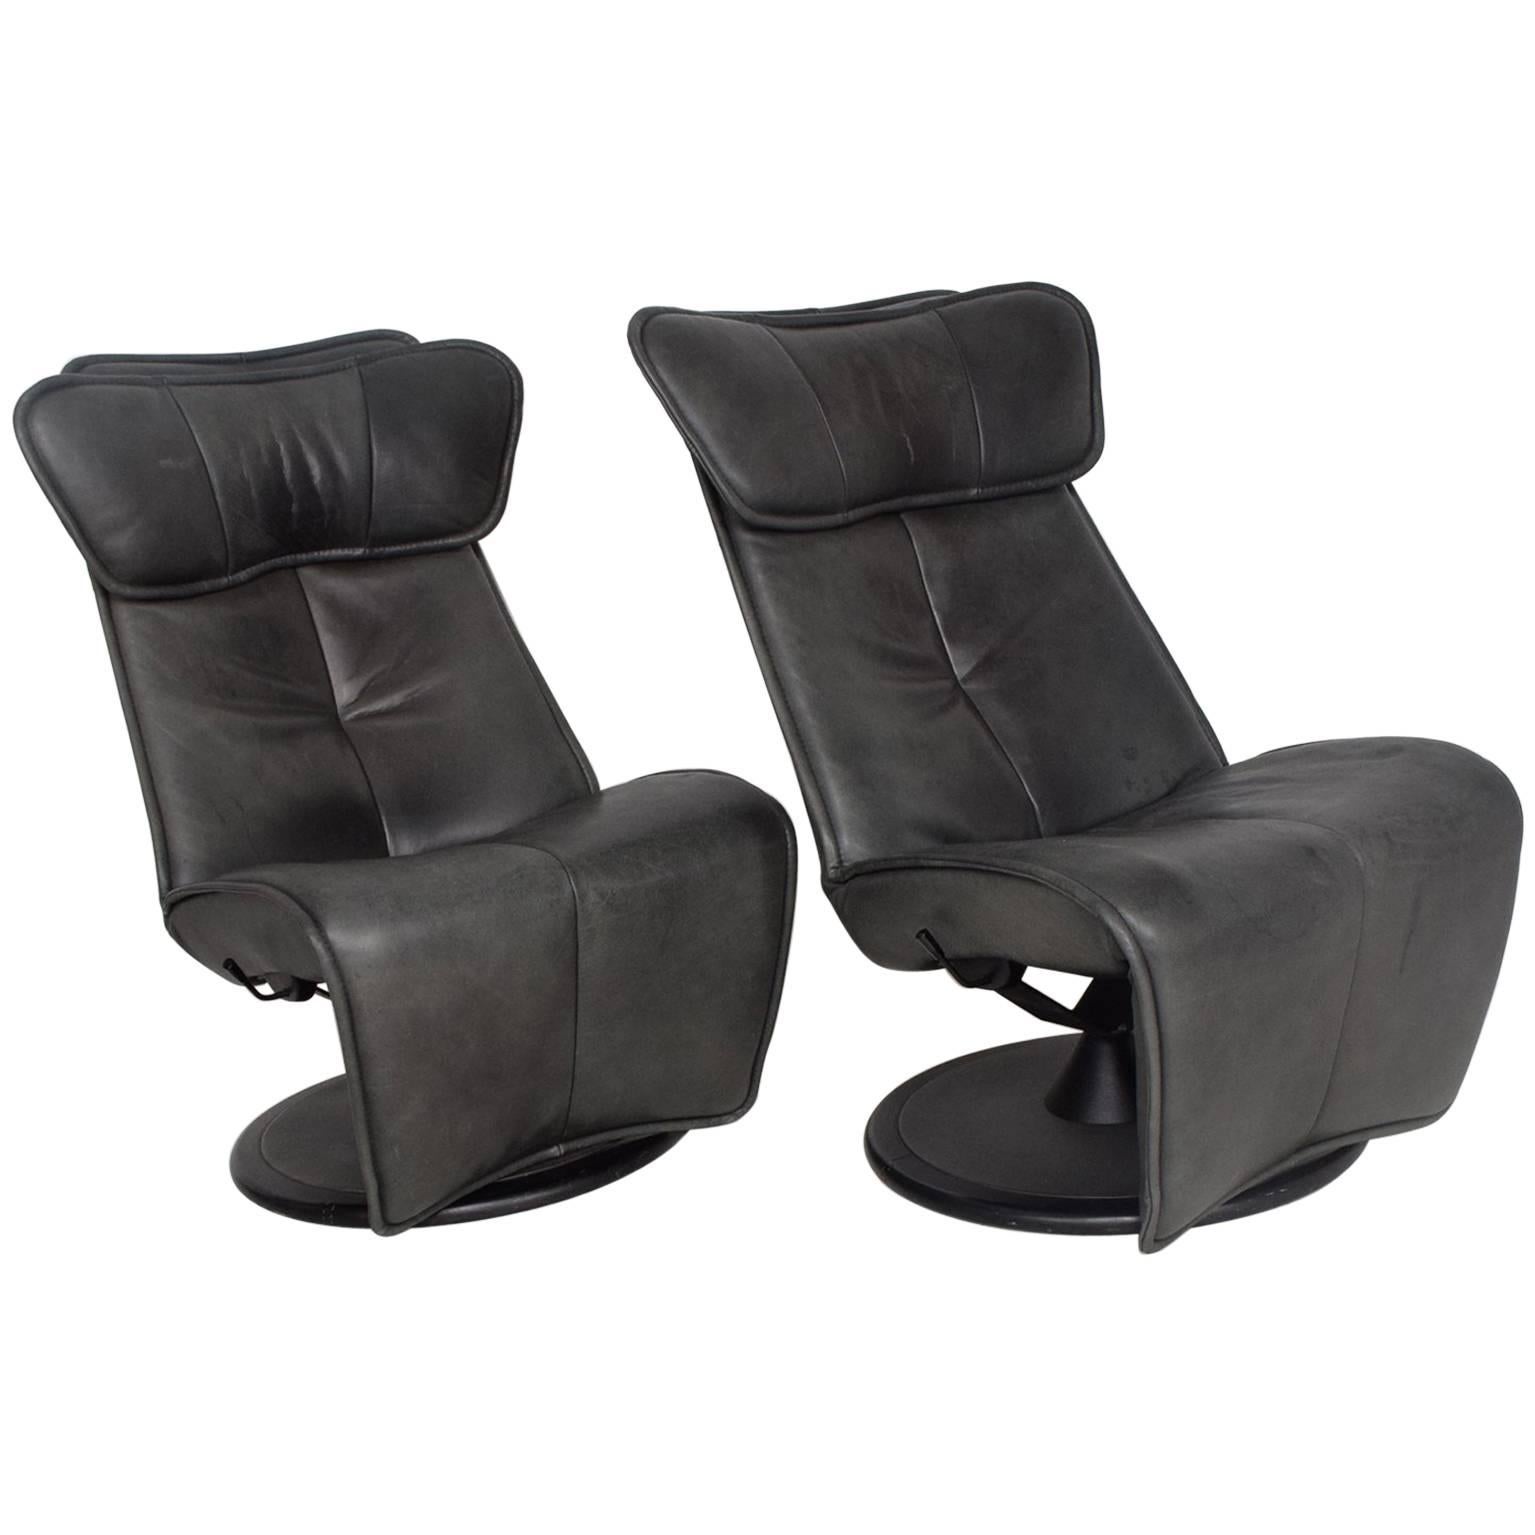 For your consideration, a Contura Zero Gravity Recliner Chair by Modi, Hjellegjerde.

Dark green leather. 

Measure: 34 1/2